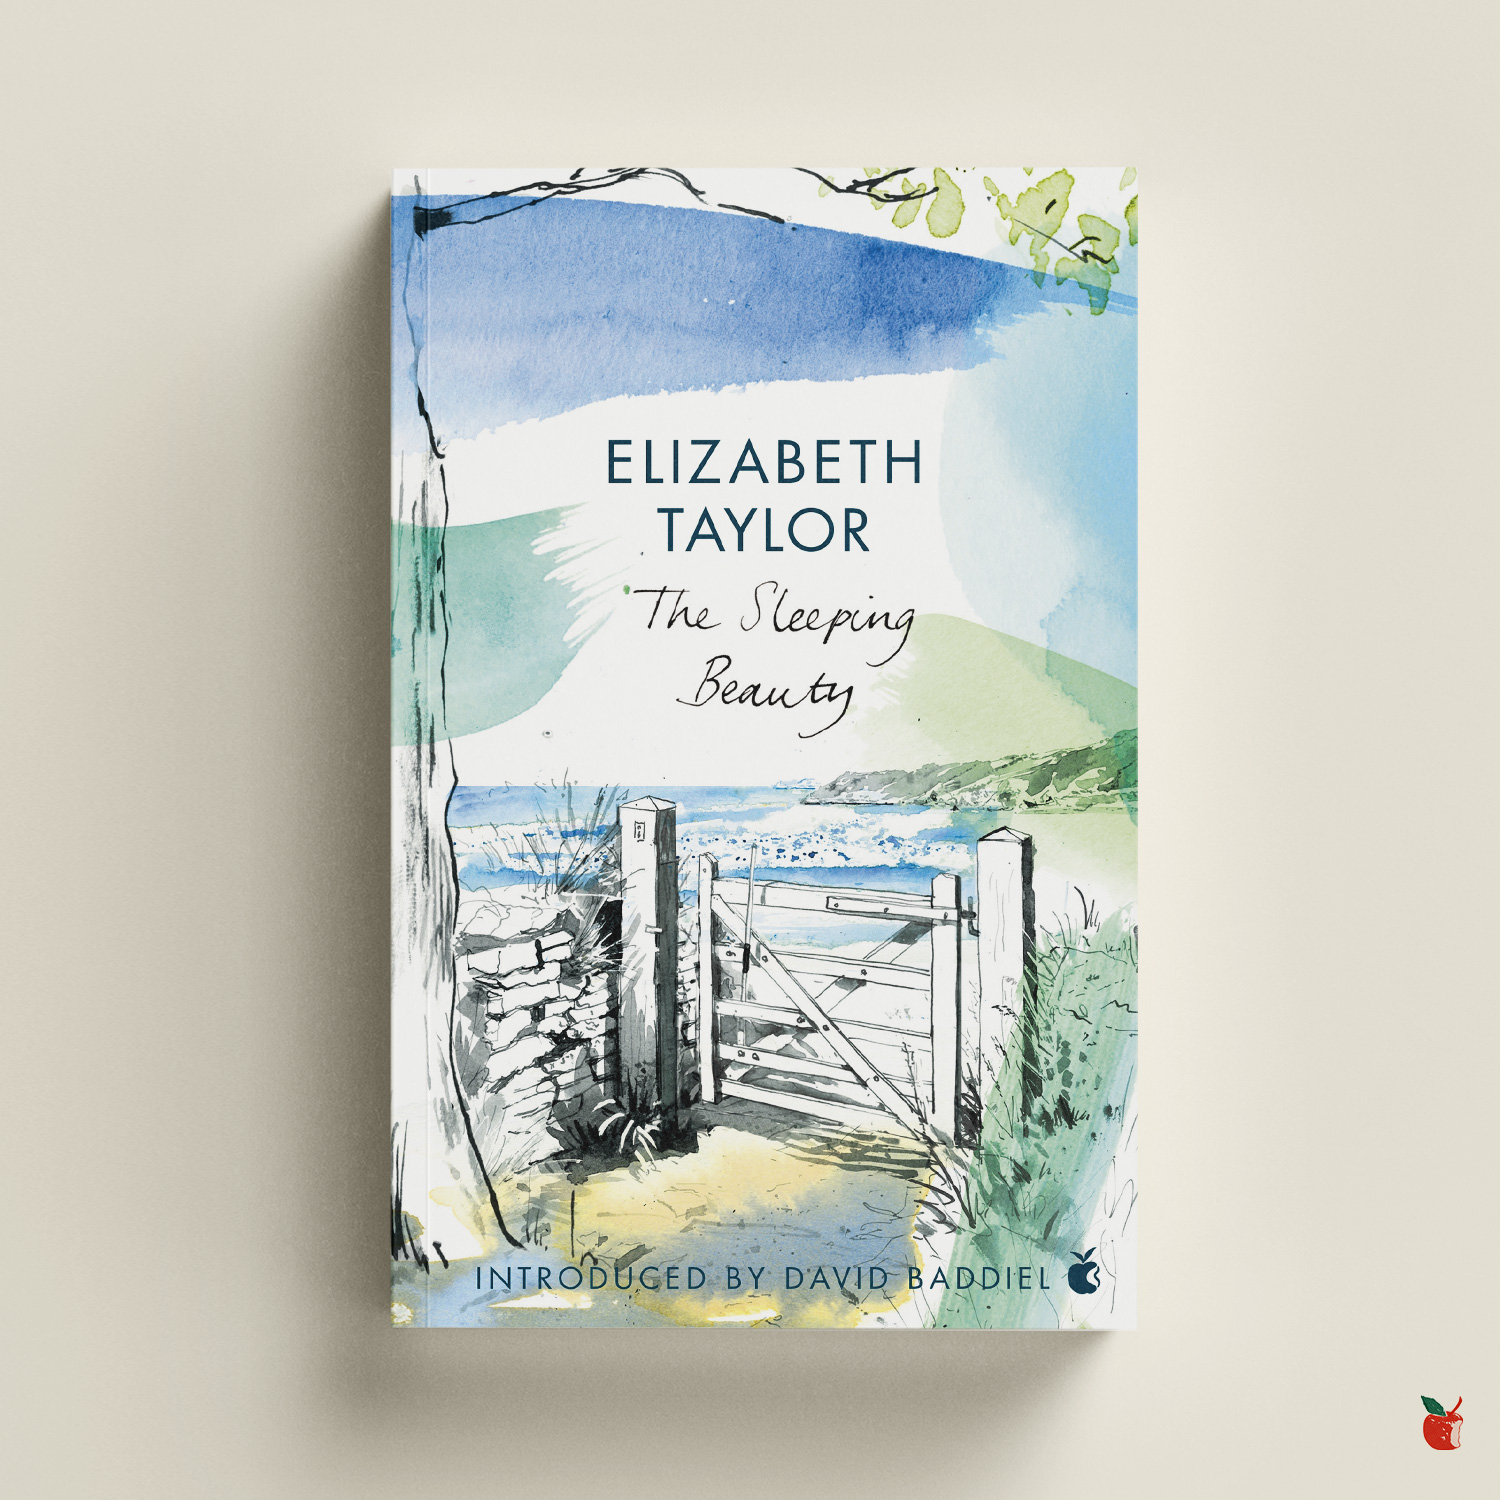 The Sleeping Beauty by Elizabeth Taylor